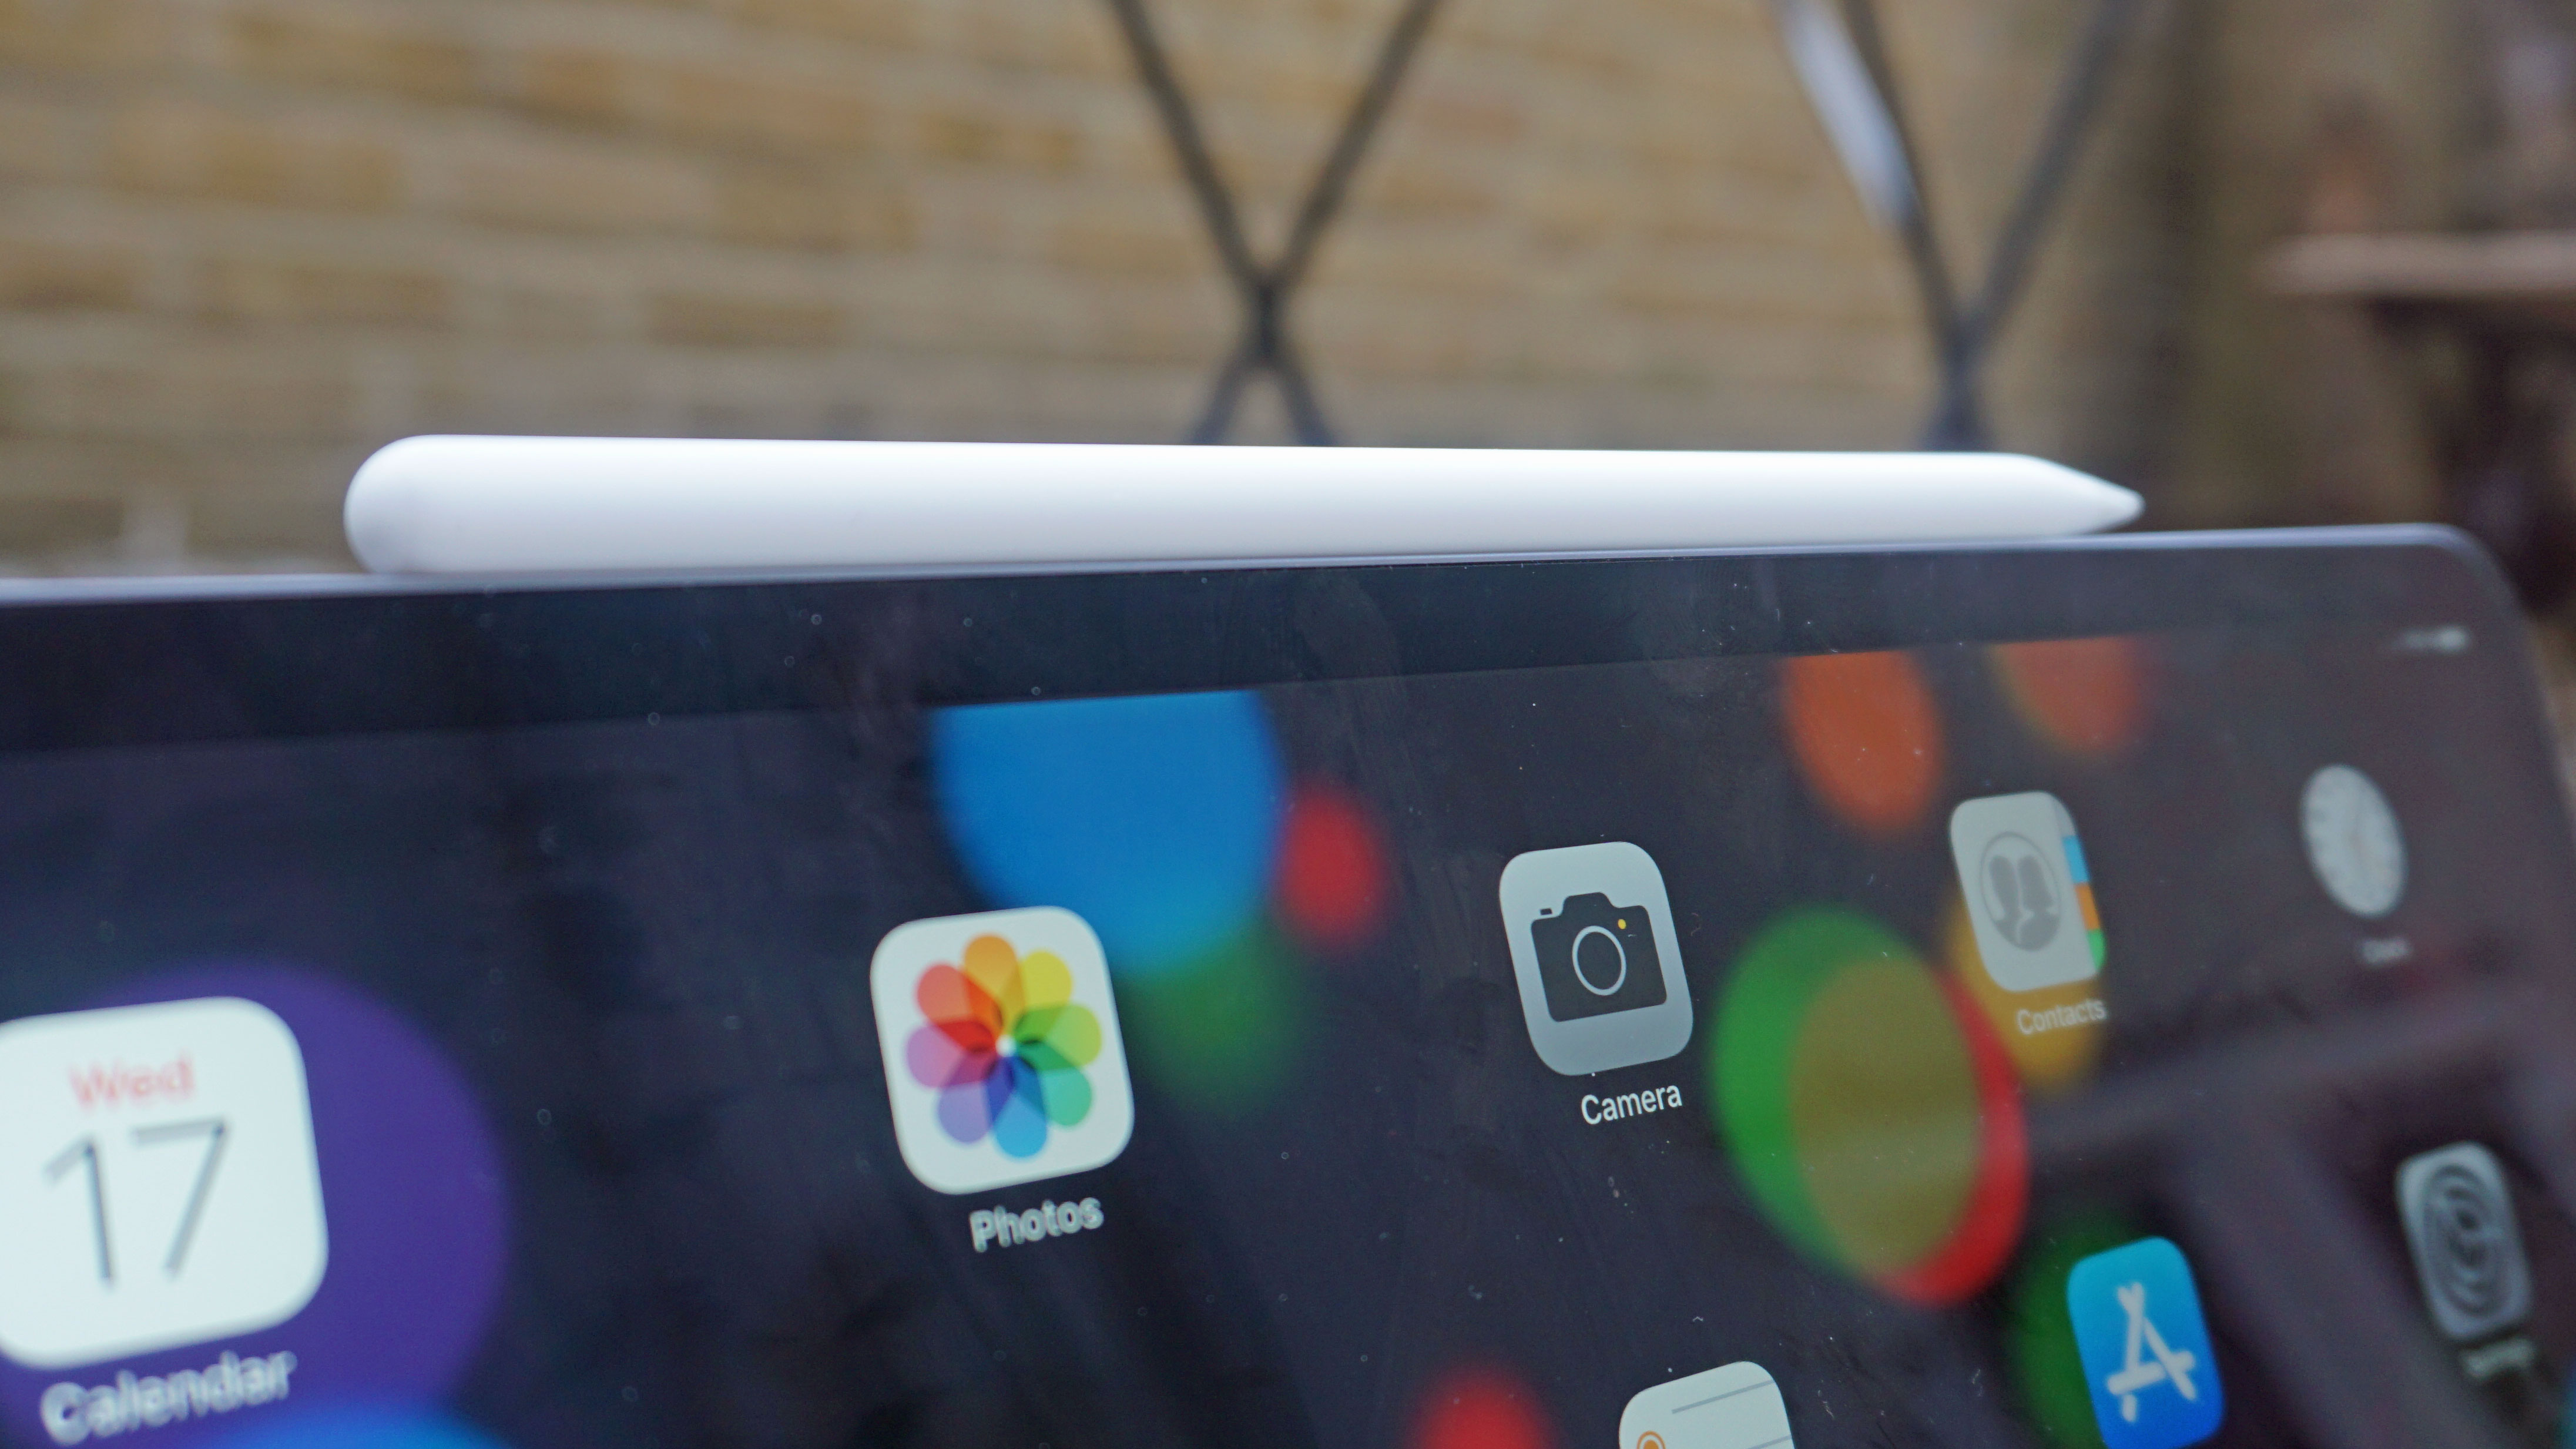 An a-pen-dage to the iPad. Image credit: TechRadar